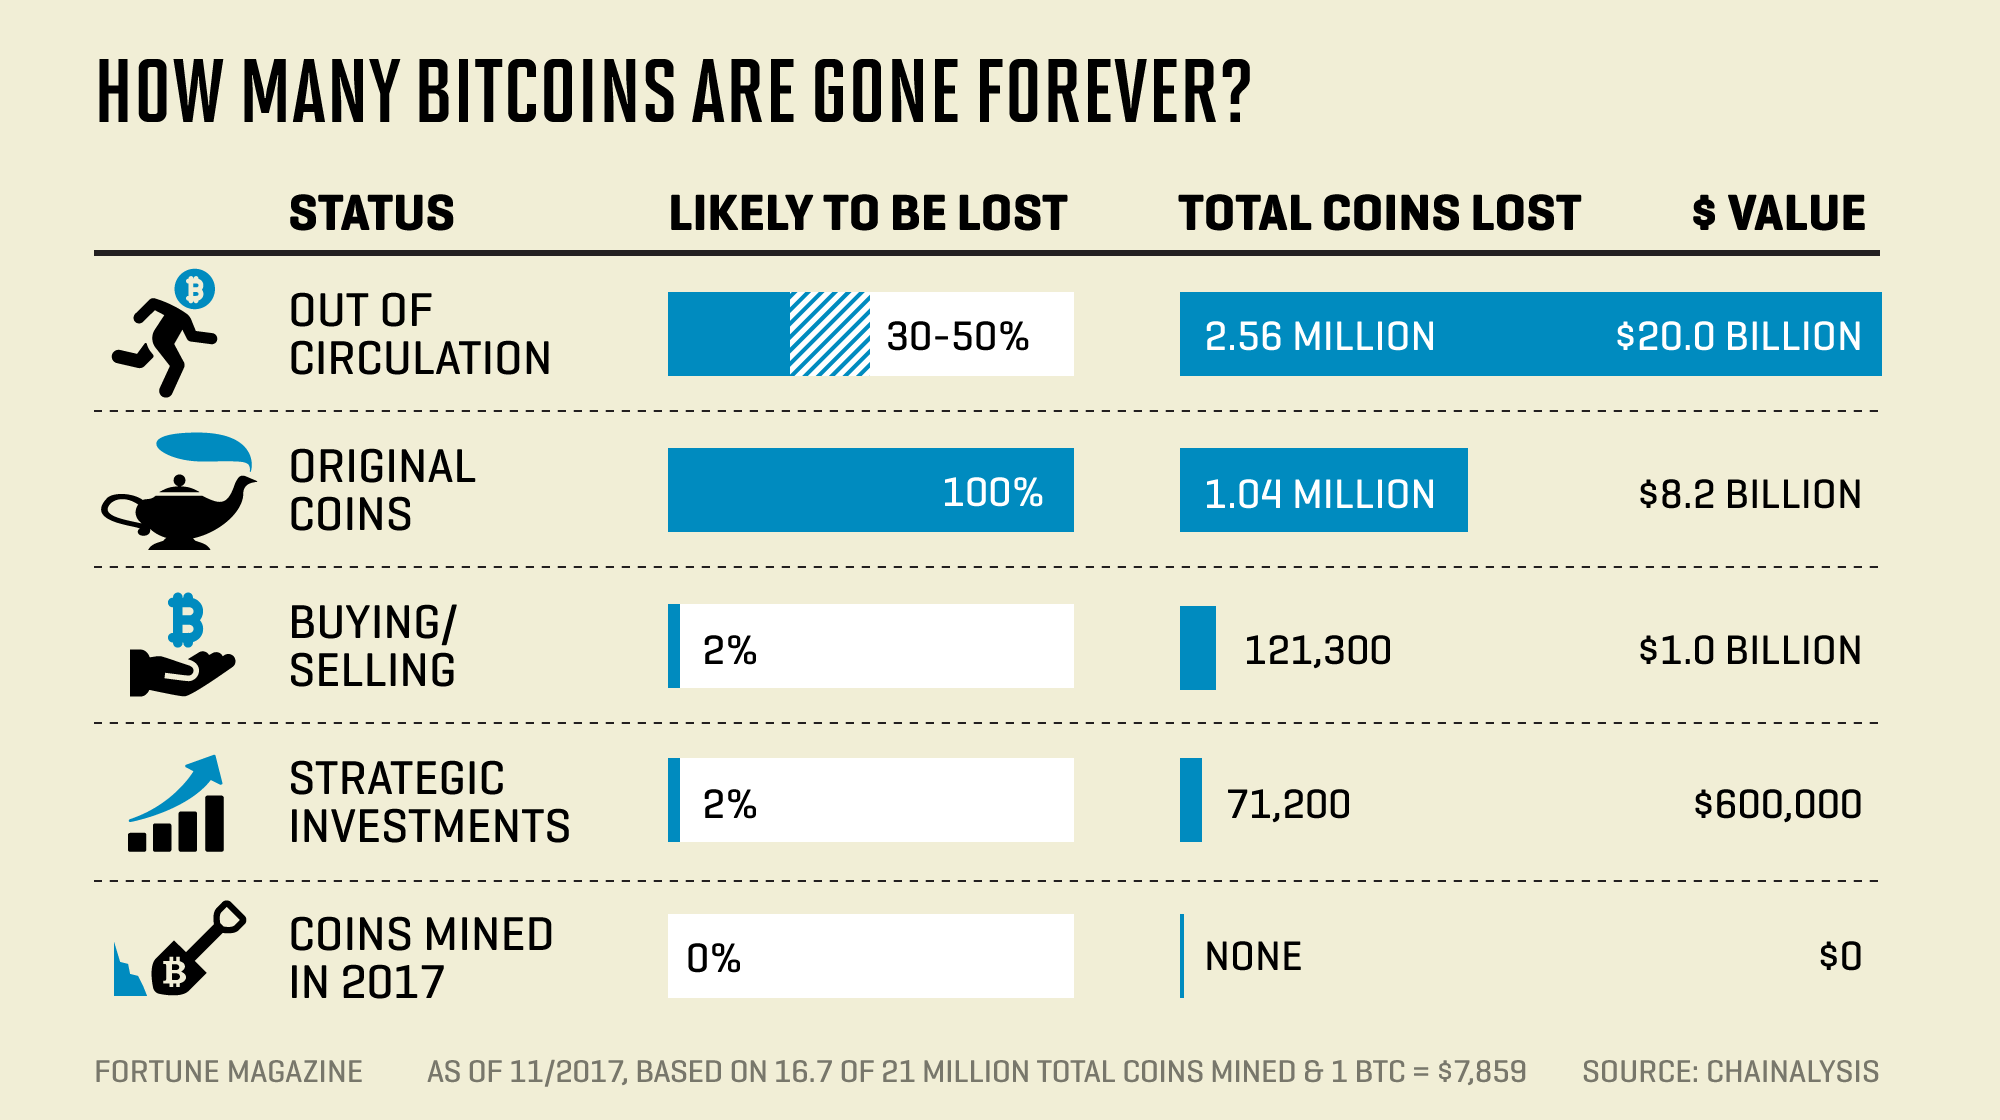 Satoshi won't need his Bitcoins! Should we try to retrieve lost Bitcoins?